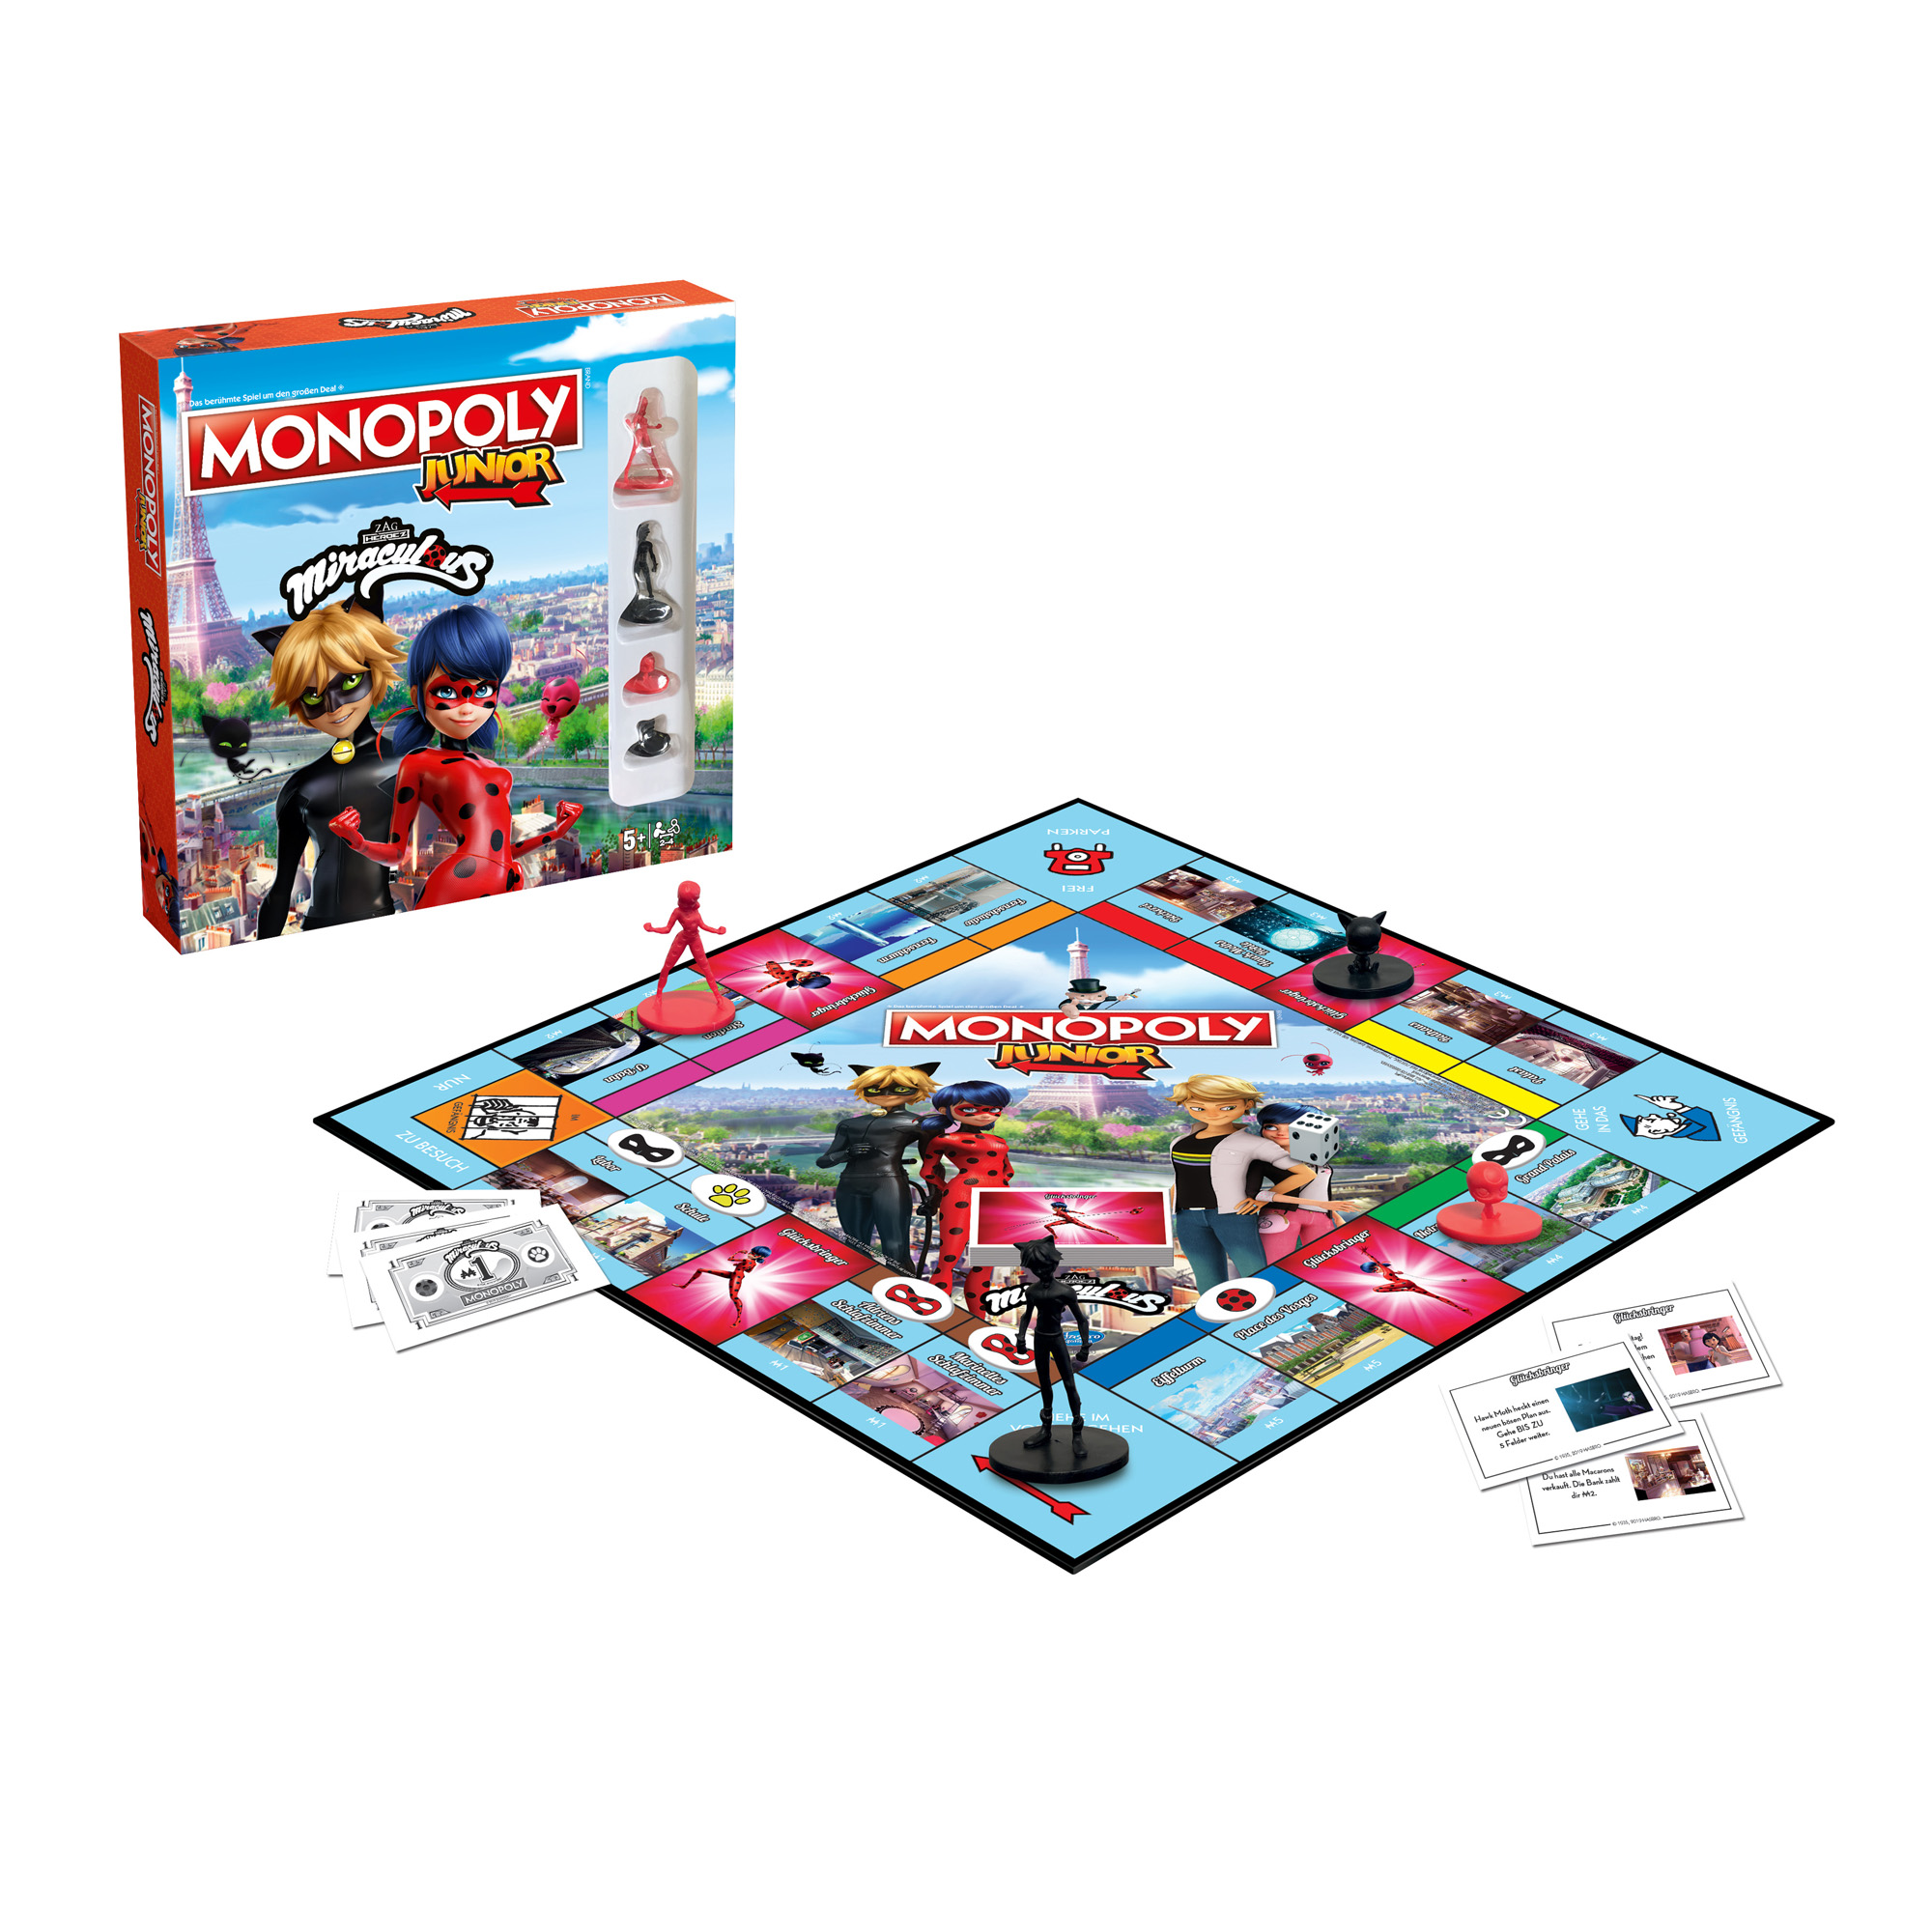 Monopoly Junior - Miraculous